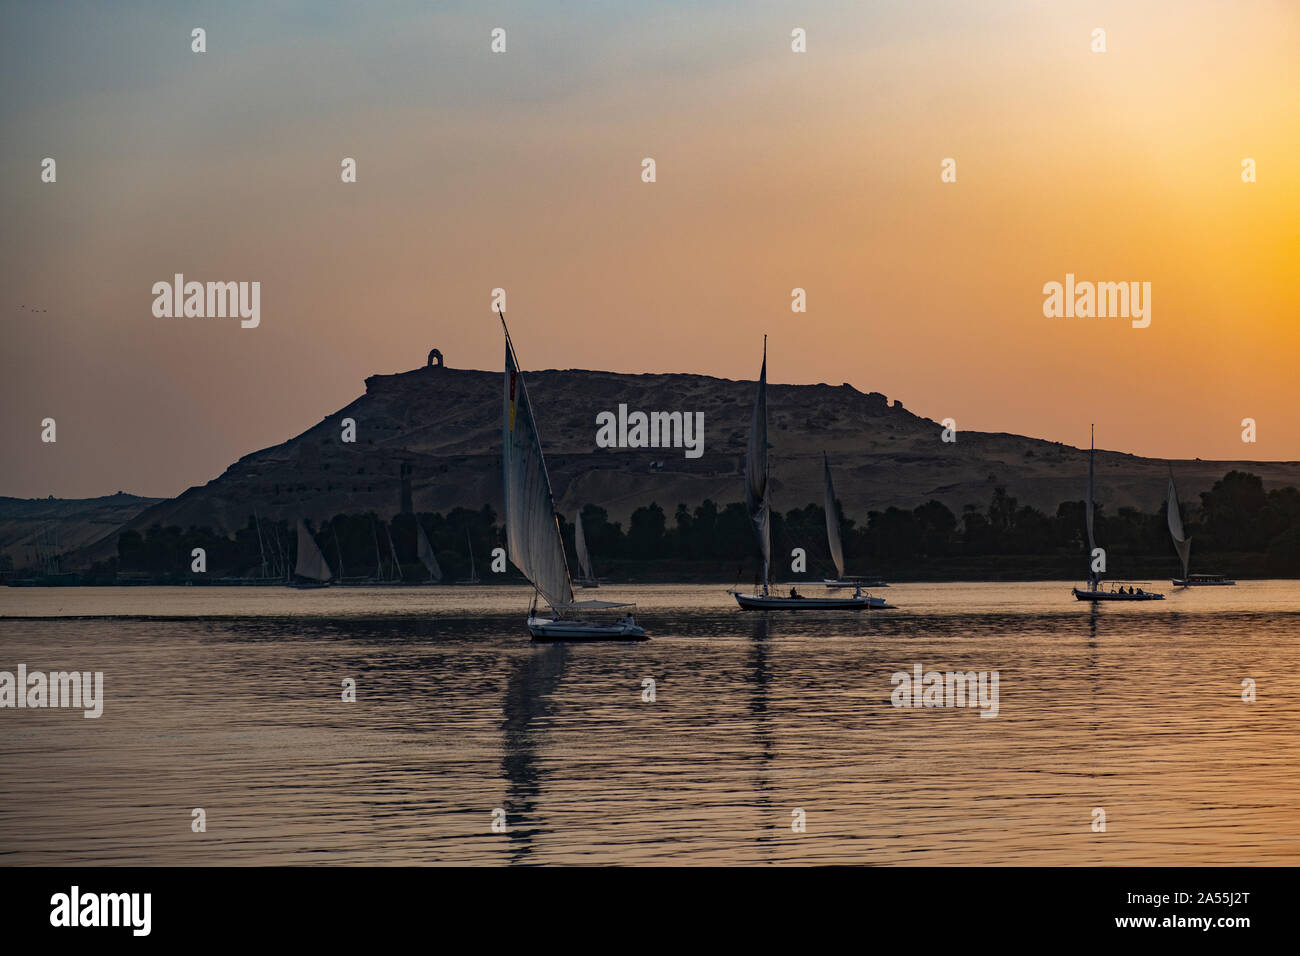 Felukka sailing boats on the Nile river near Assuan, Egypt. Stock Photo